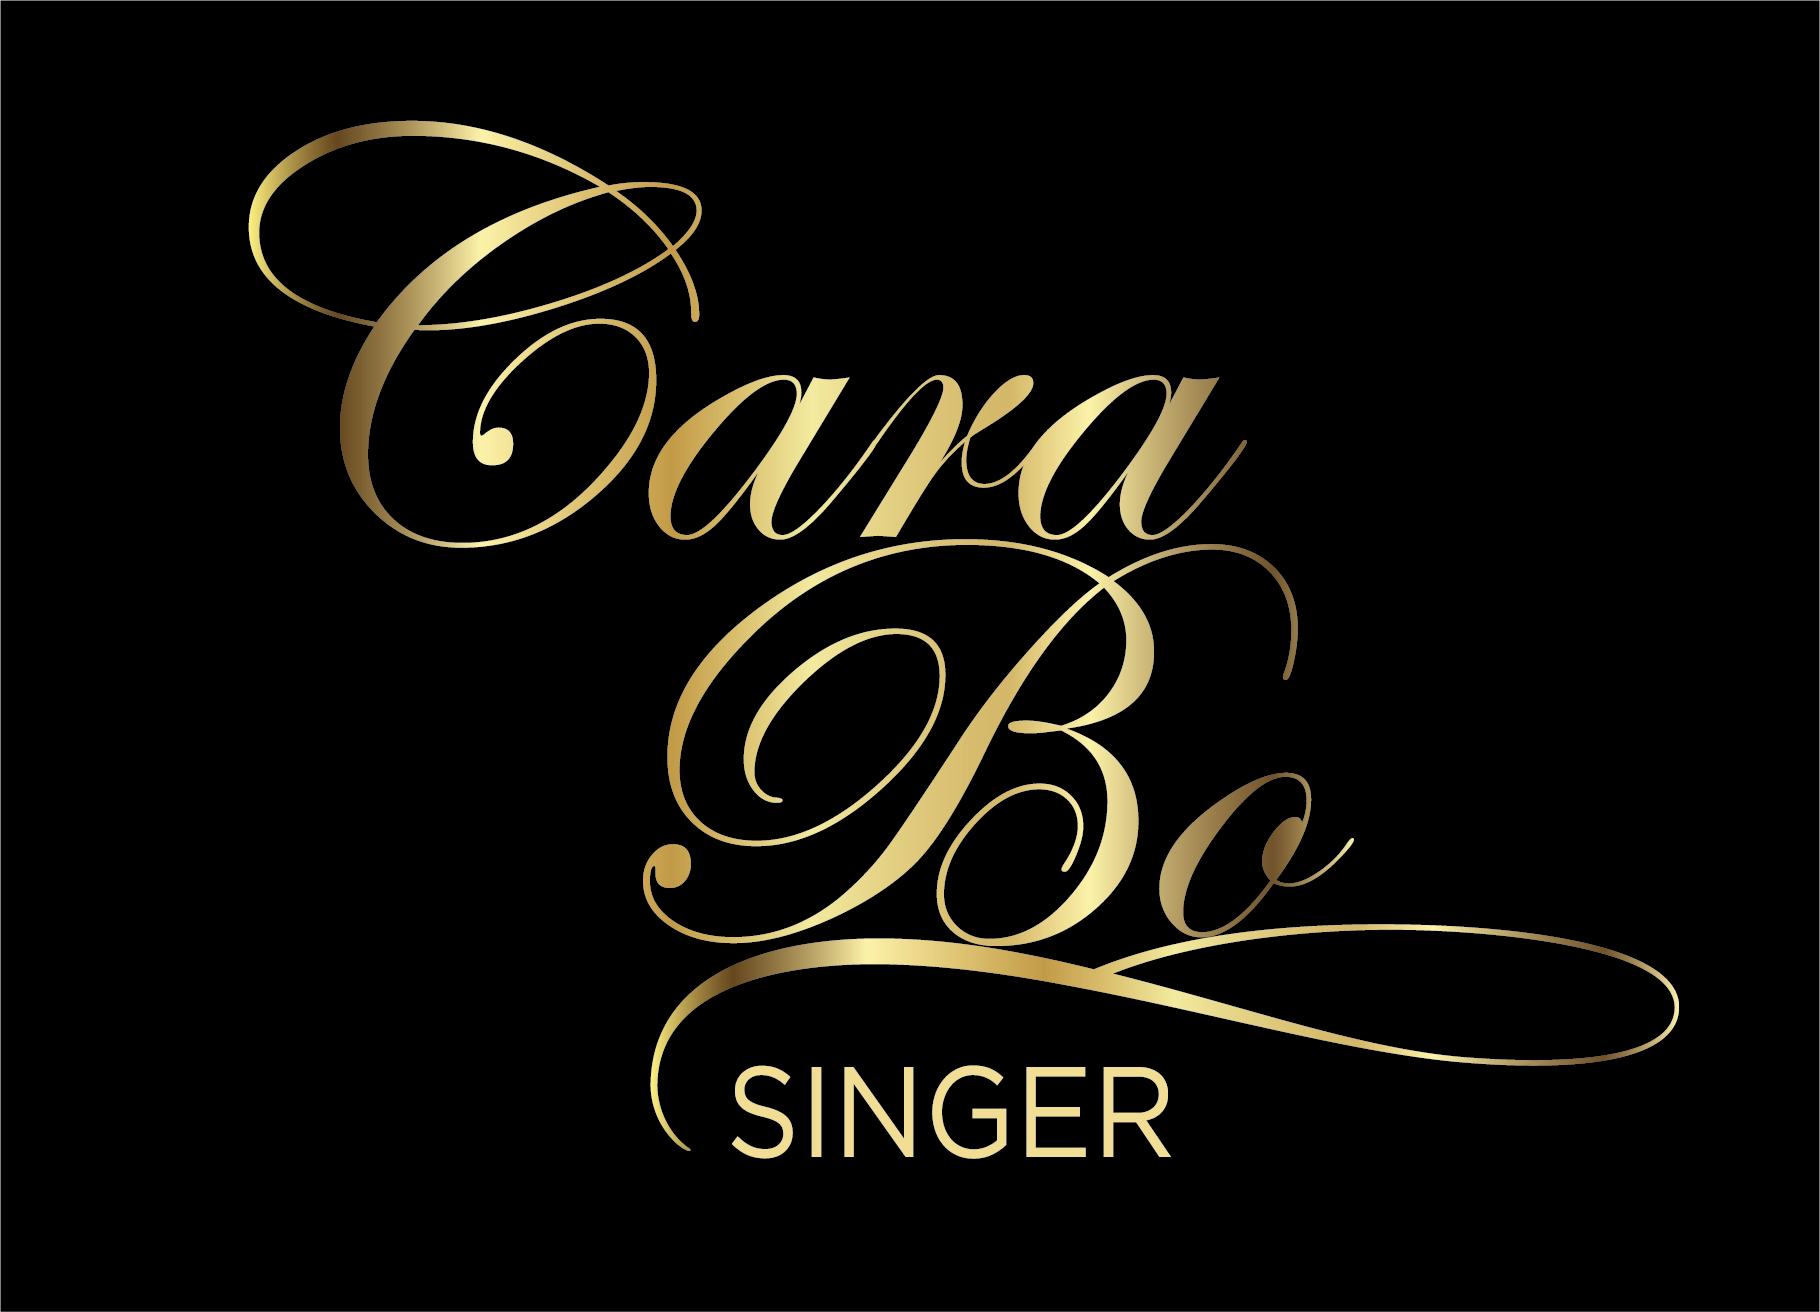 Cara Bo Logo 2